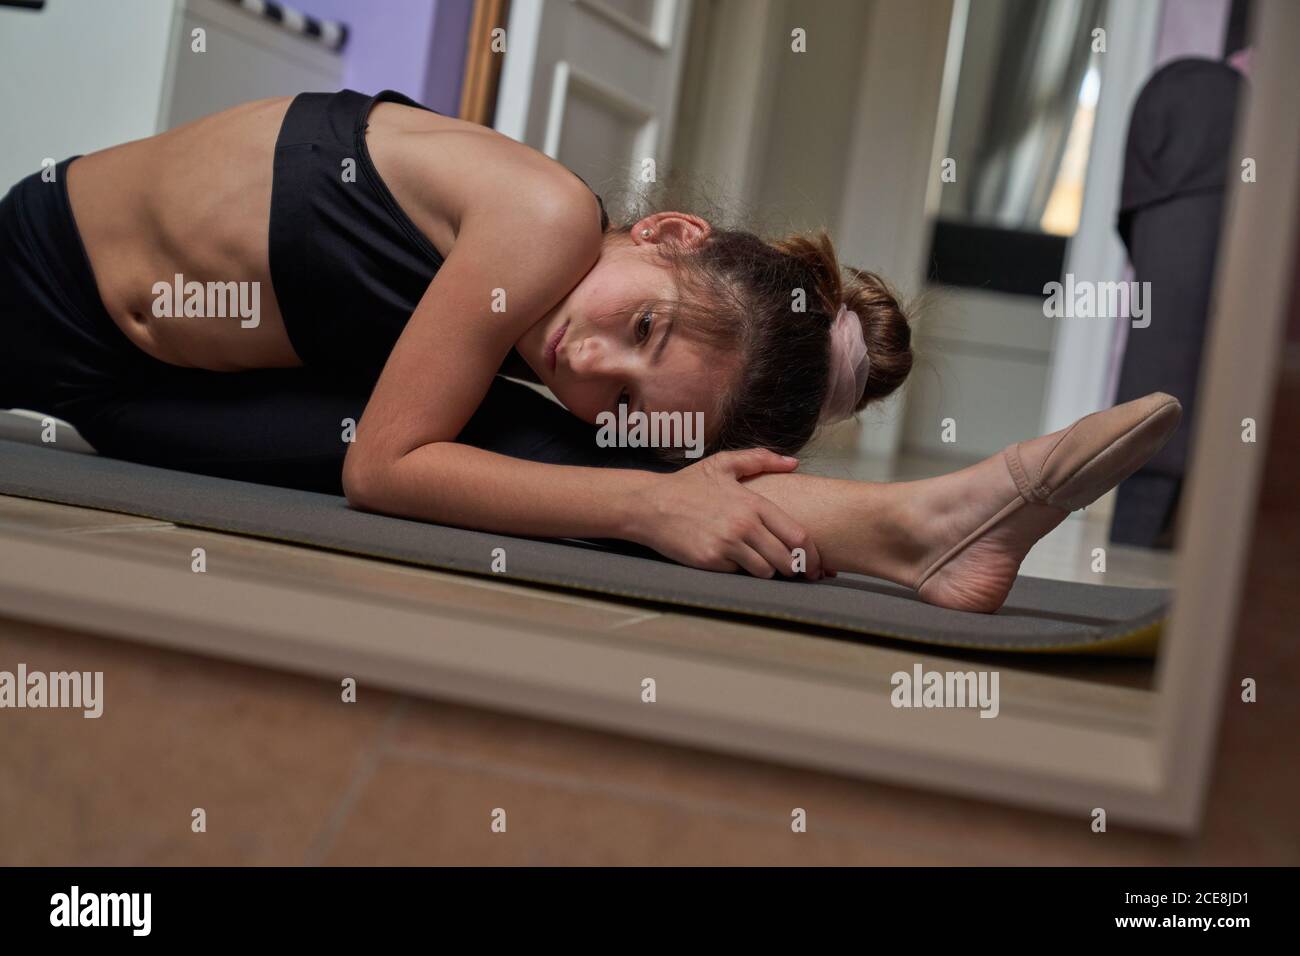 Slim teenage girl sitting on mat doing splits practicing gymnastics in front of mirror Stock Photo